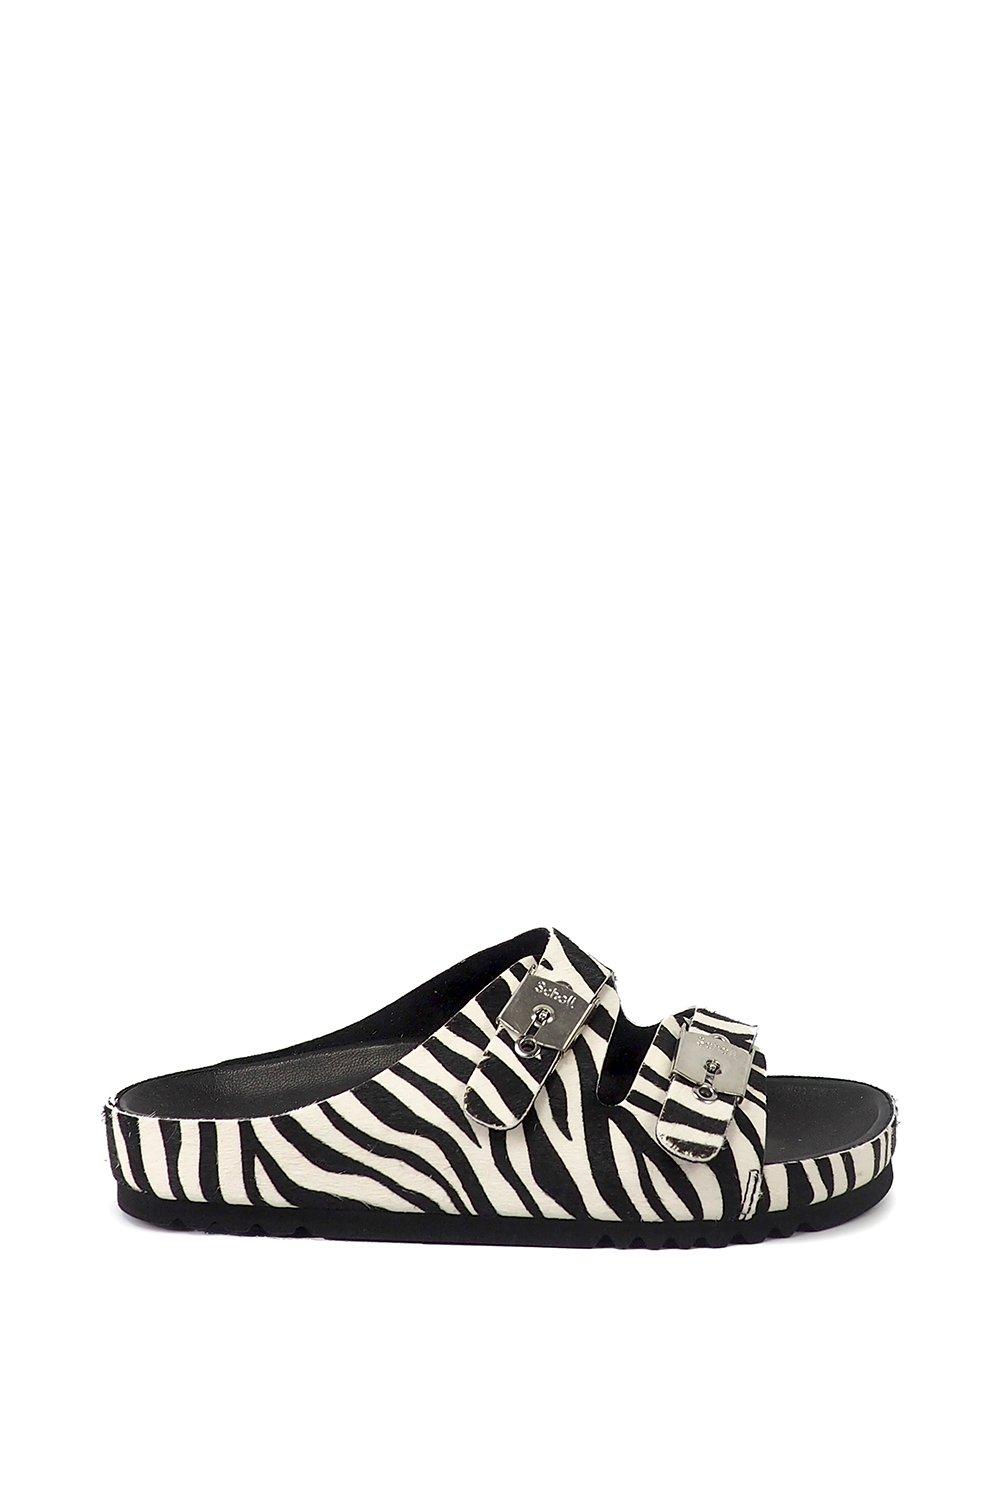 Flats | 'Kimm' Zebra Leather & Cork Double Strap Sandal | Scholl